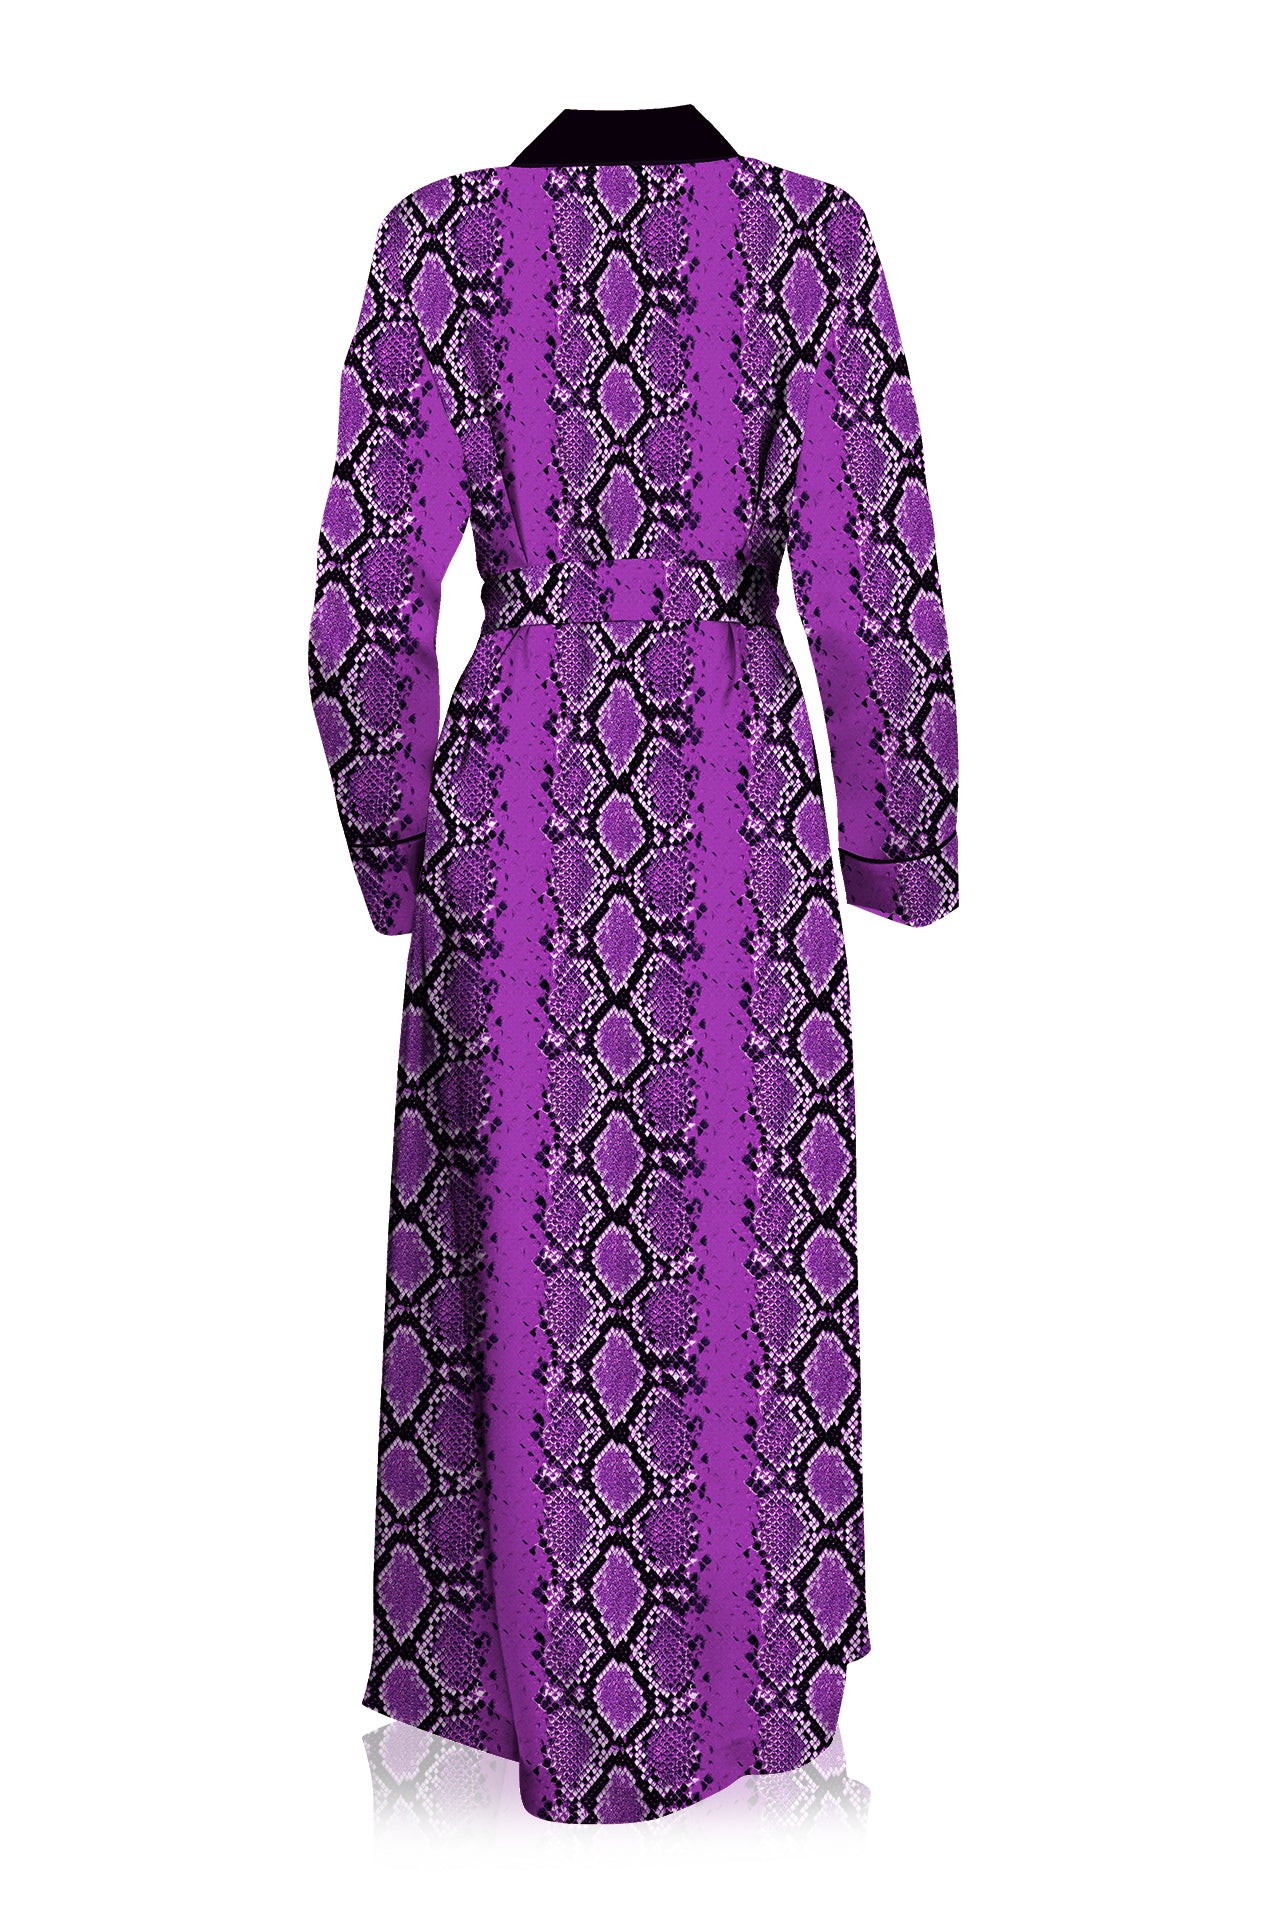 "robe silk kimono" "Kyle X Shahida" "purple silk robe women's" "snake print kimono"